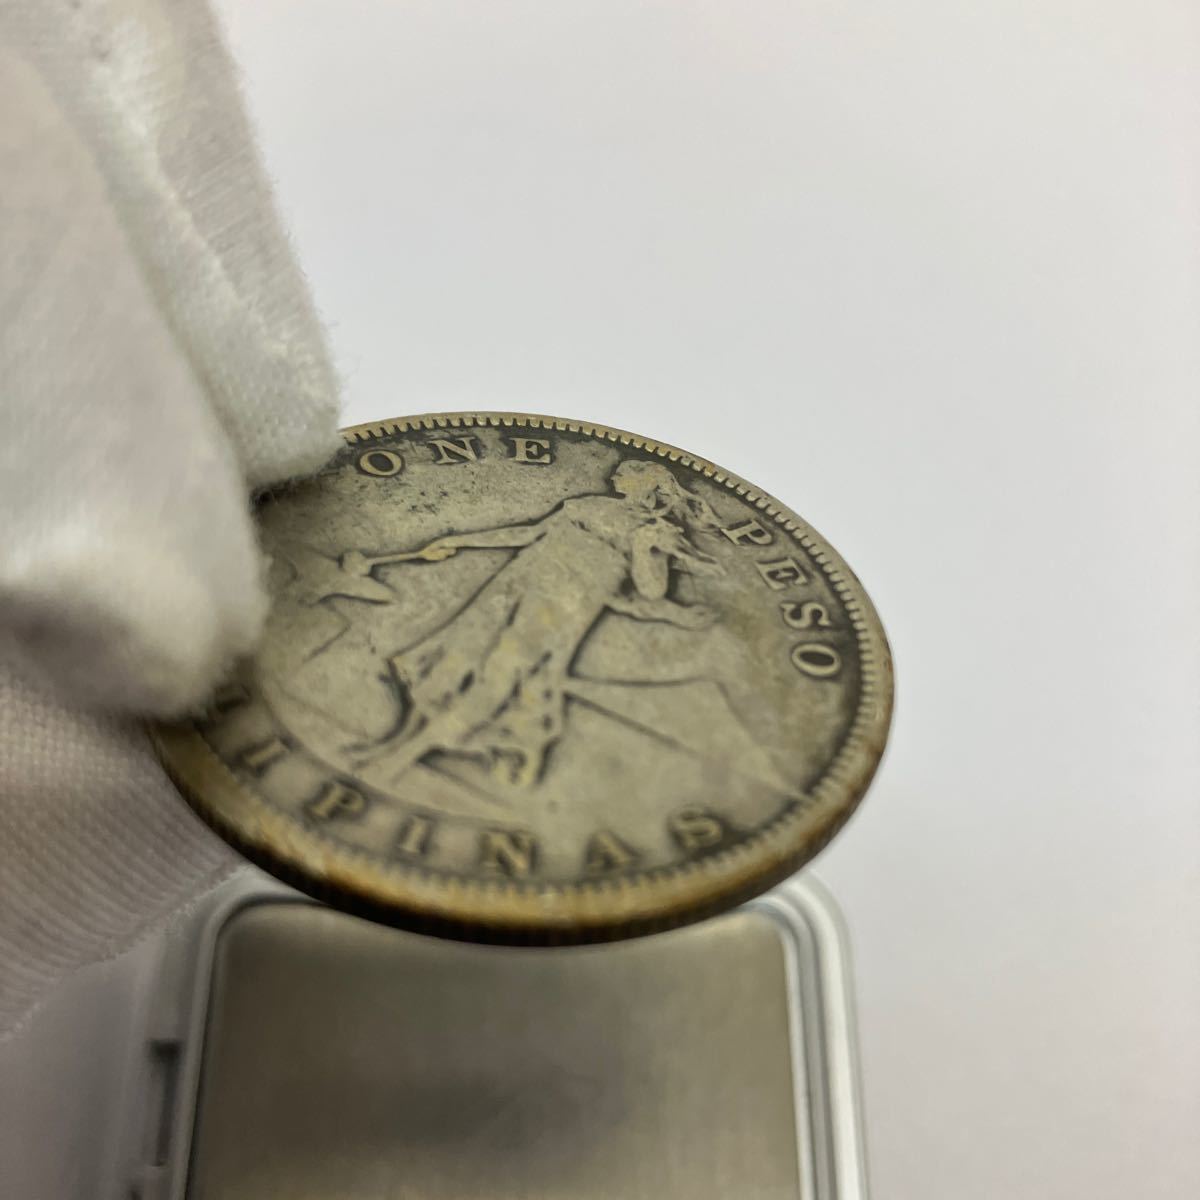 【E/D11602】 海外コイン 1ペソ銀貨 米領フィリピン連邦 アメリカ合衆国サンフランシスコ造幣局 _画像5